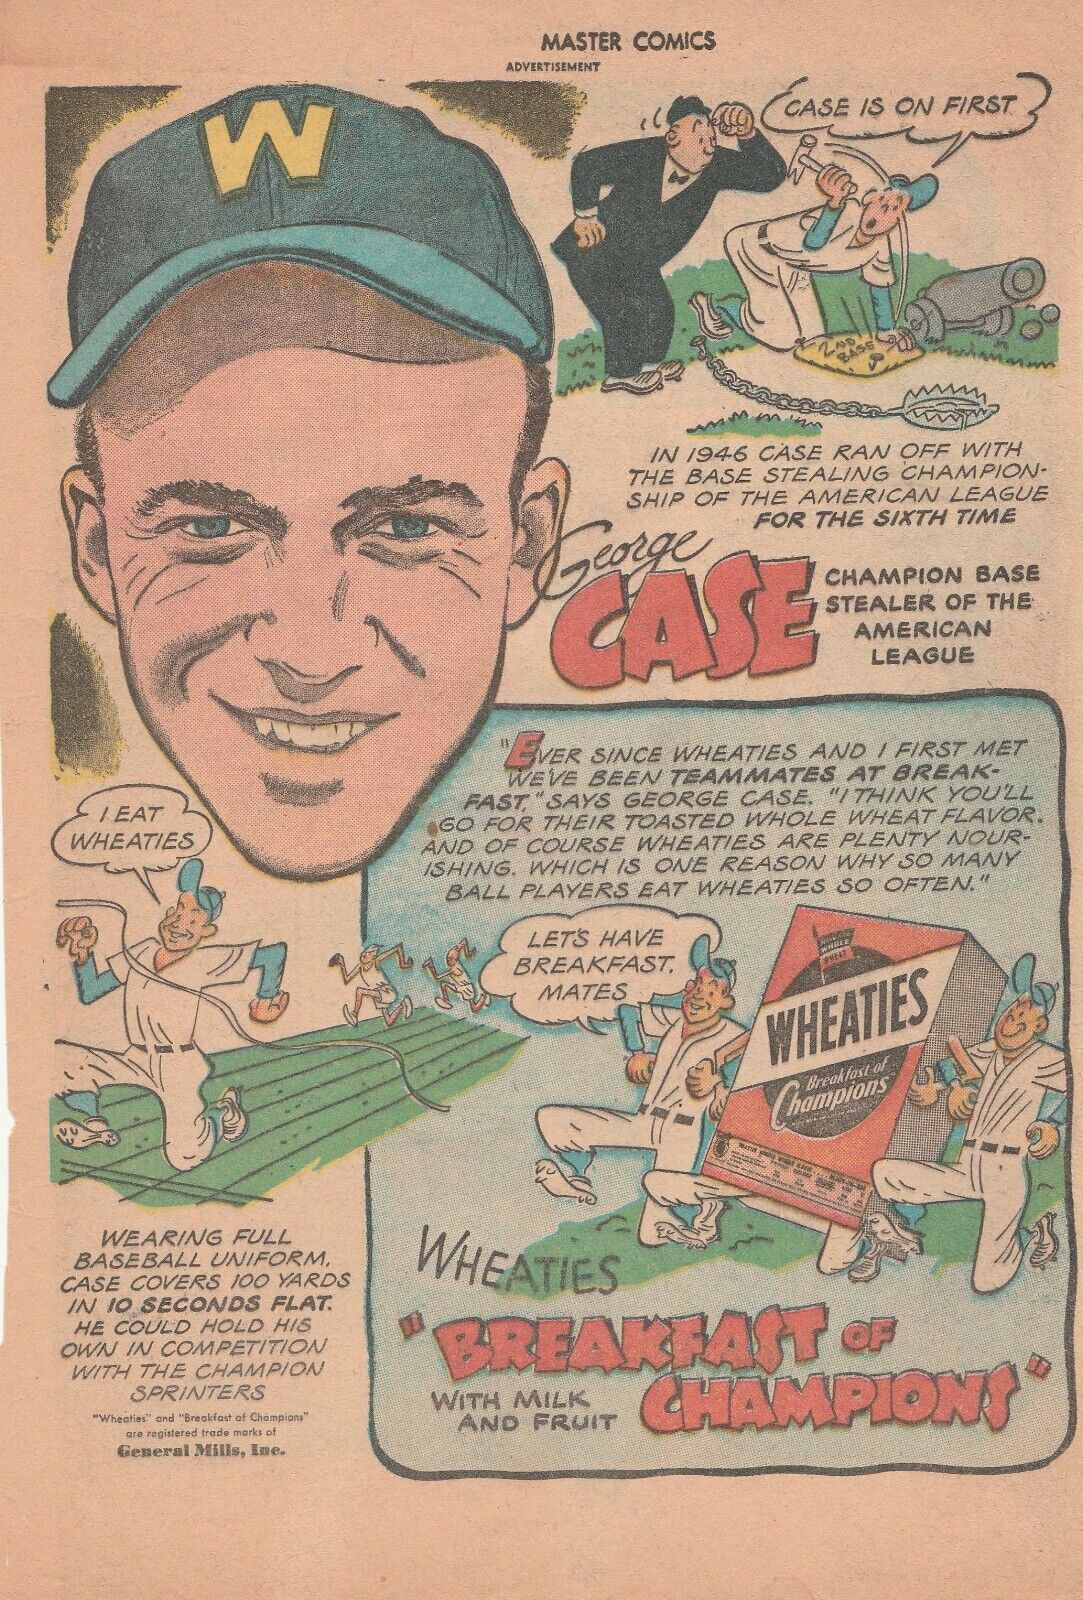 1947 Wheaties Advertisement Featuring George Case Of The Washington Senators